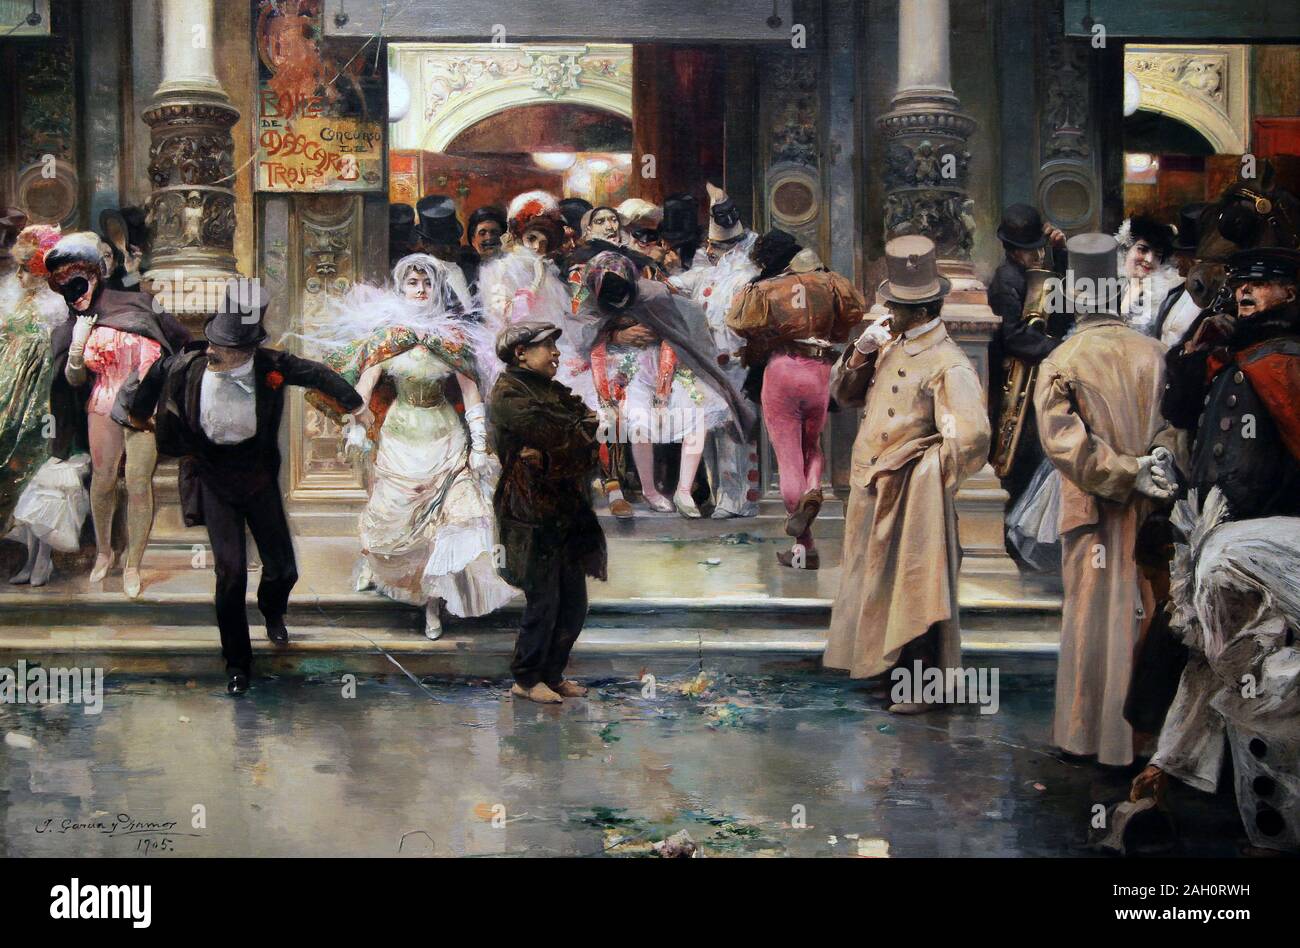 Leaving the Masqued Ball 1905 by José García Ramos 1852-1912 Spanish painter / pintor ilustrador español. Stock Photo